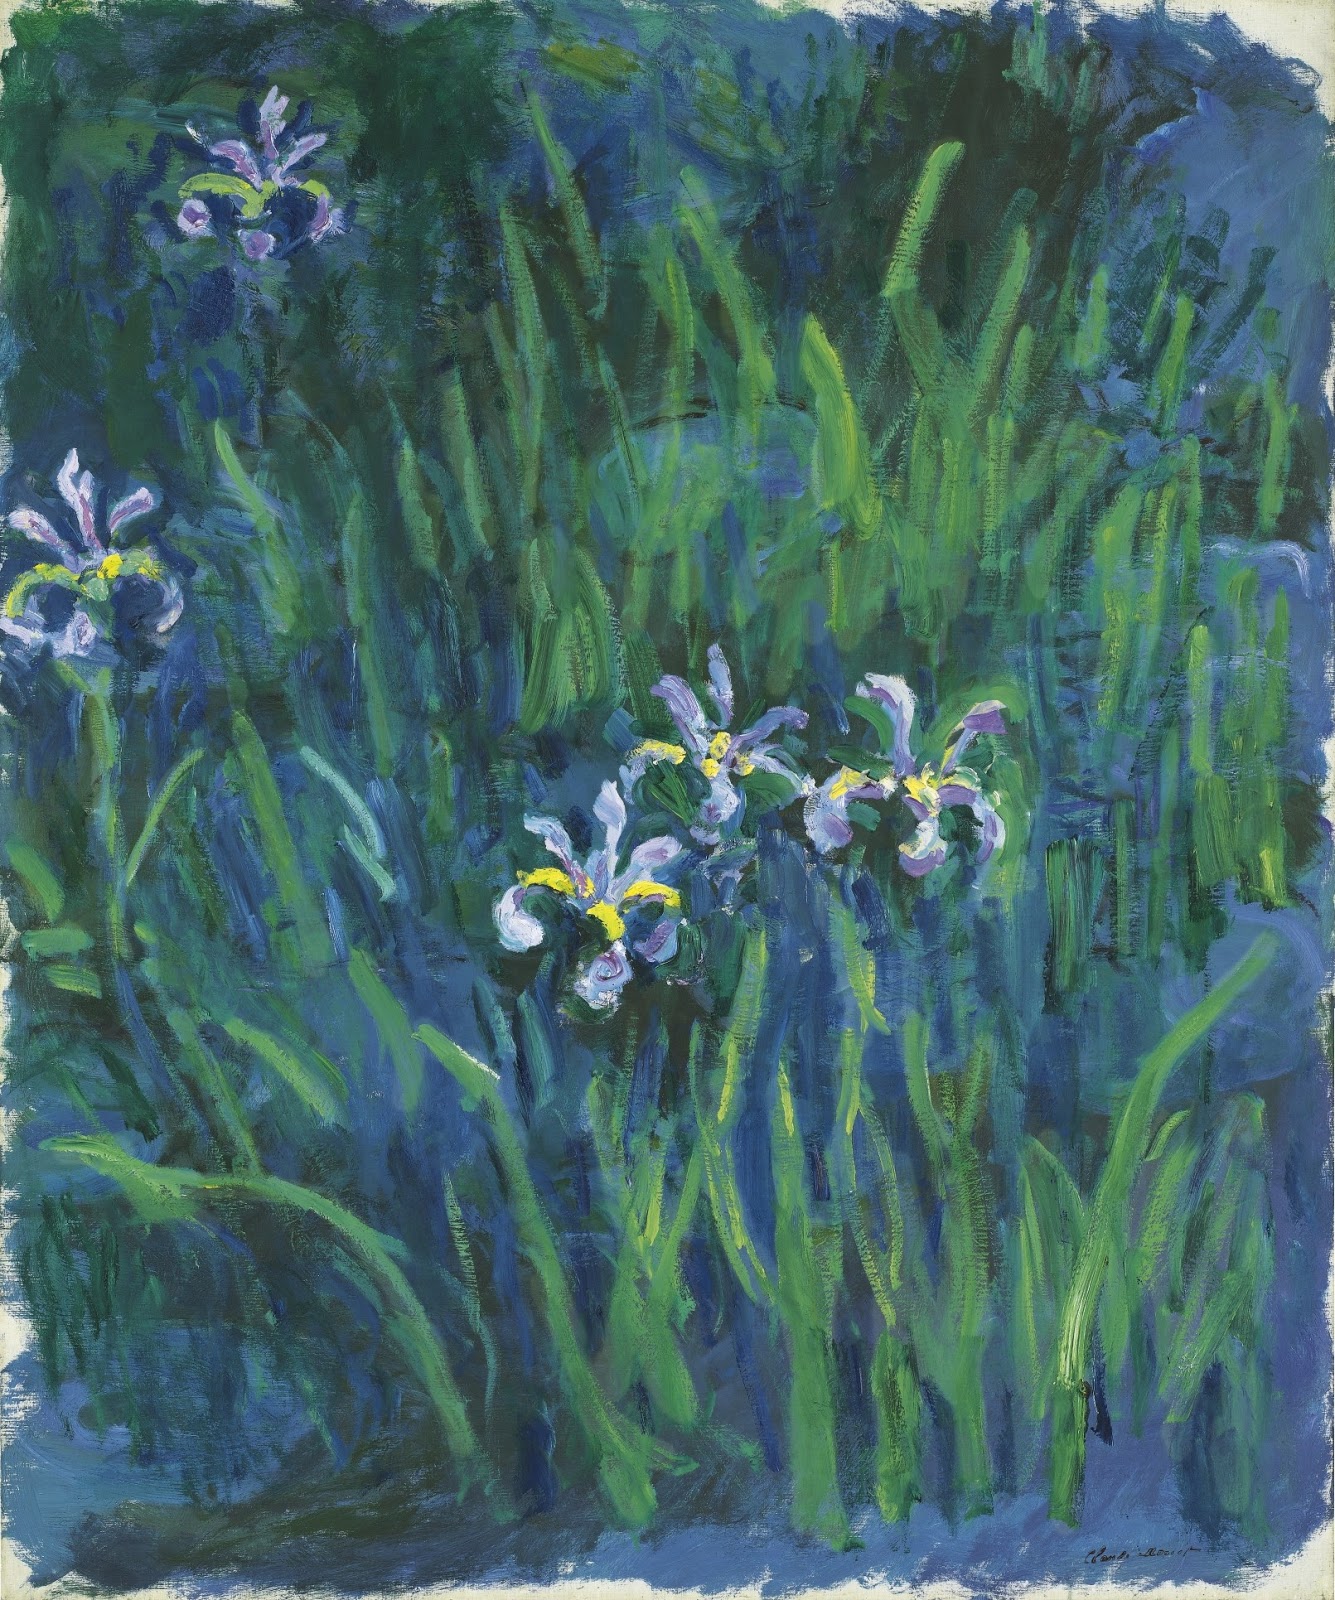 Claude+Monet-1840-1926 (331).jpg